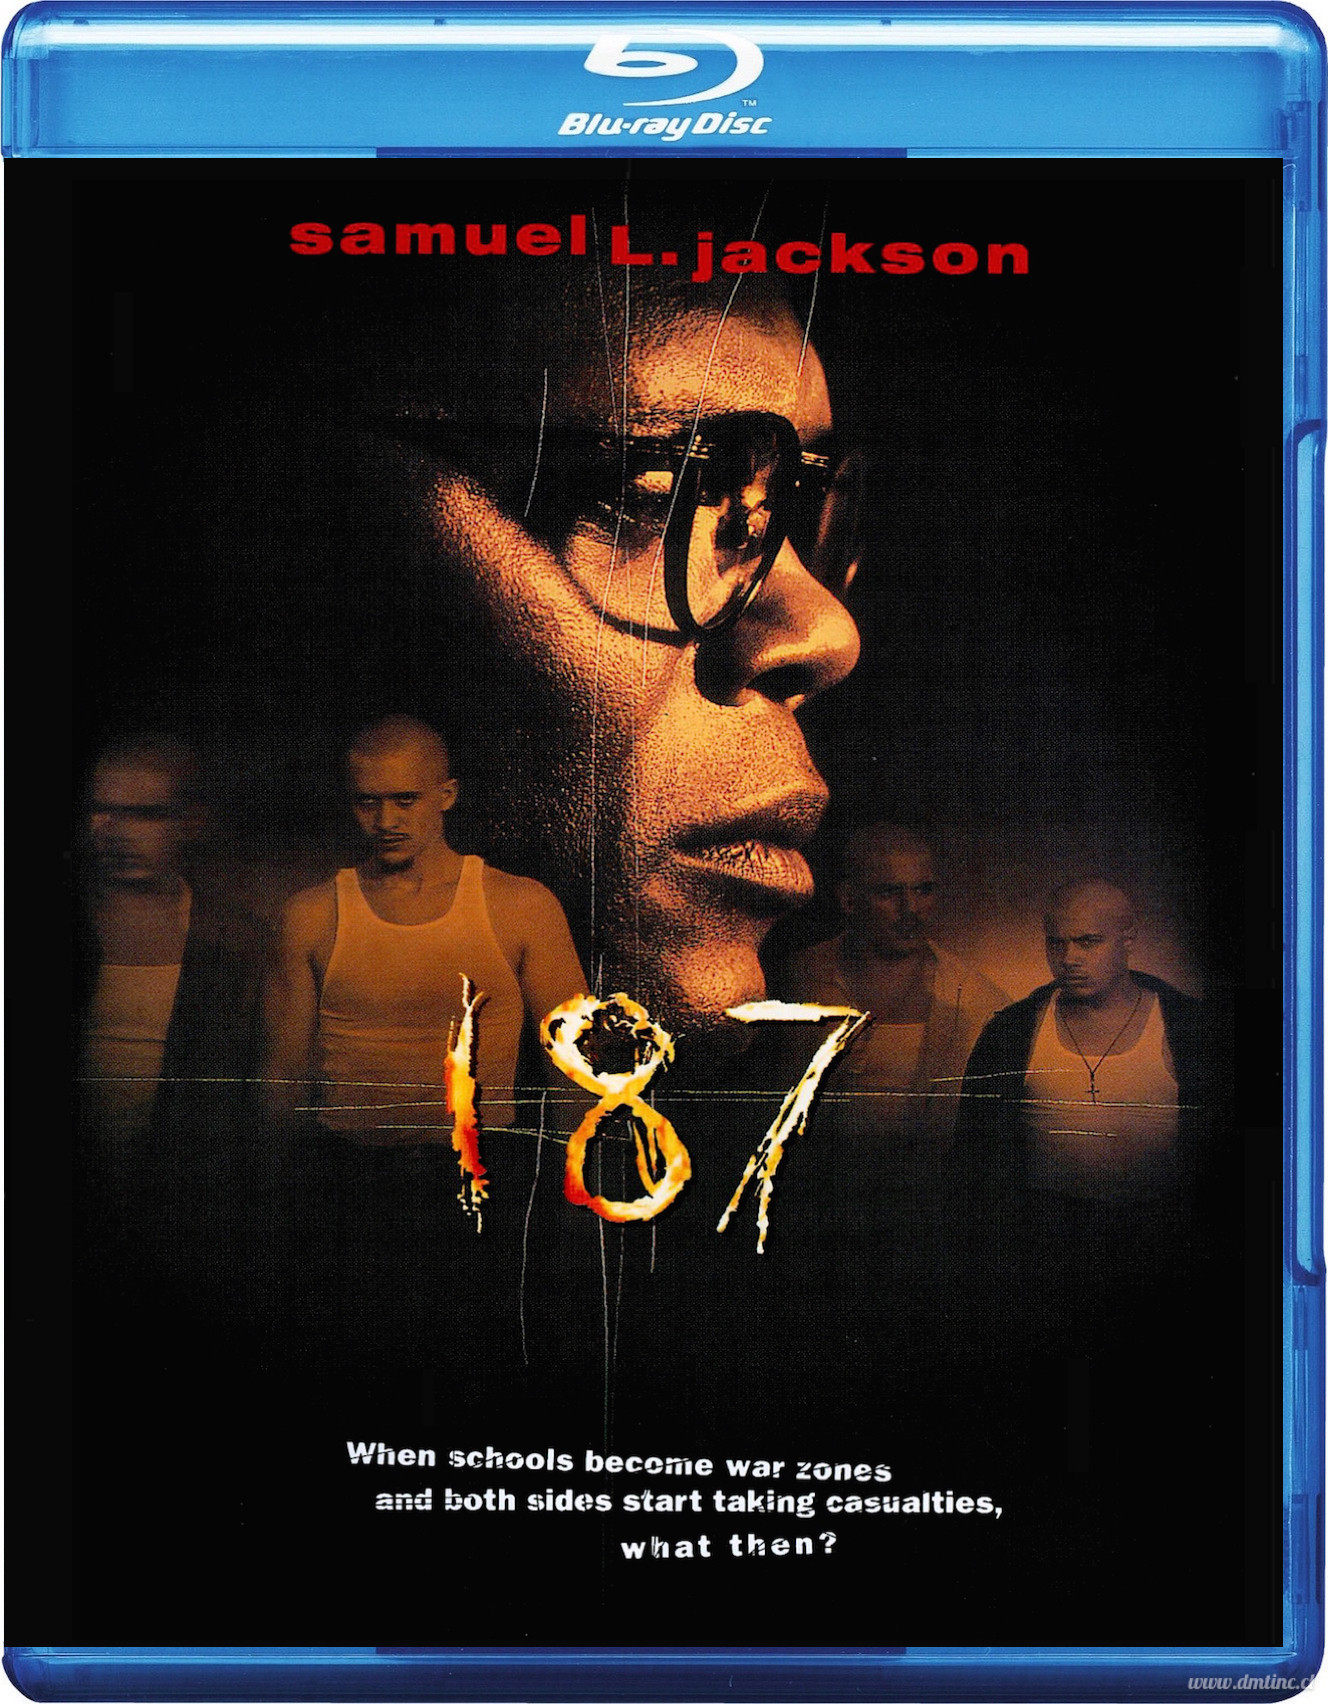 187 (Samuel L. Jackson) 1997  720p dual